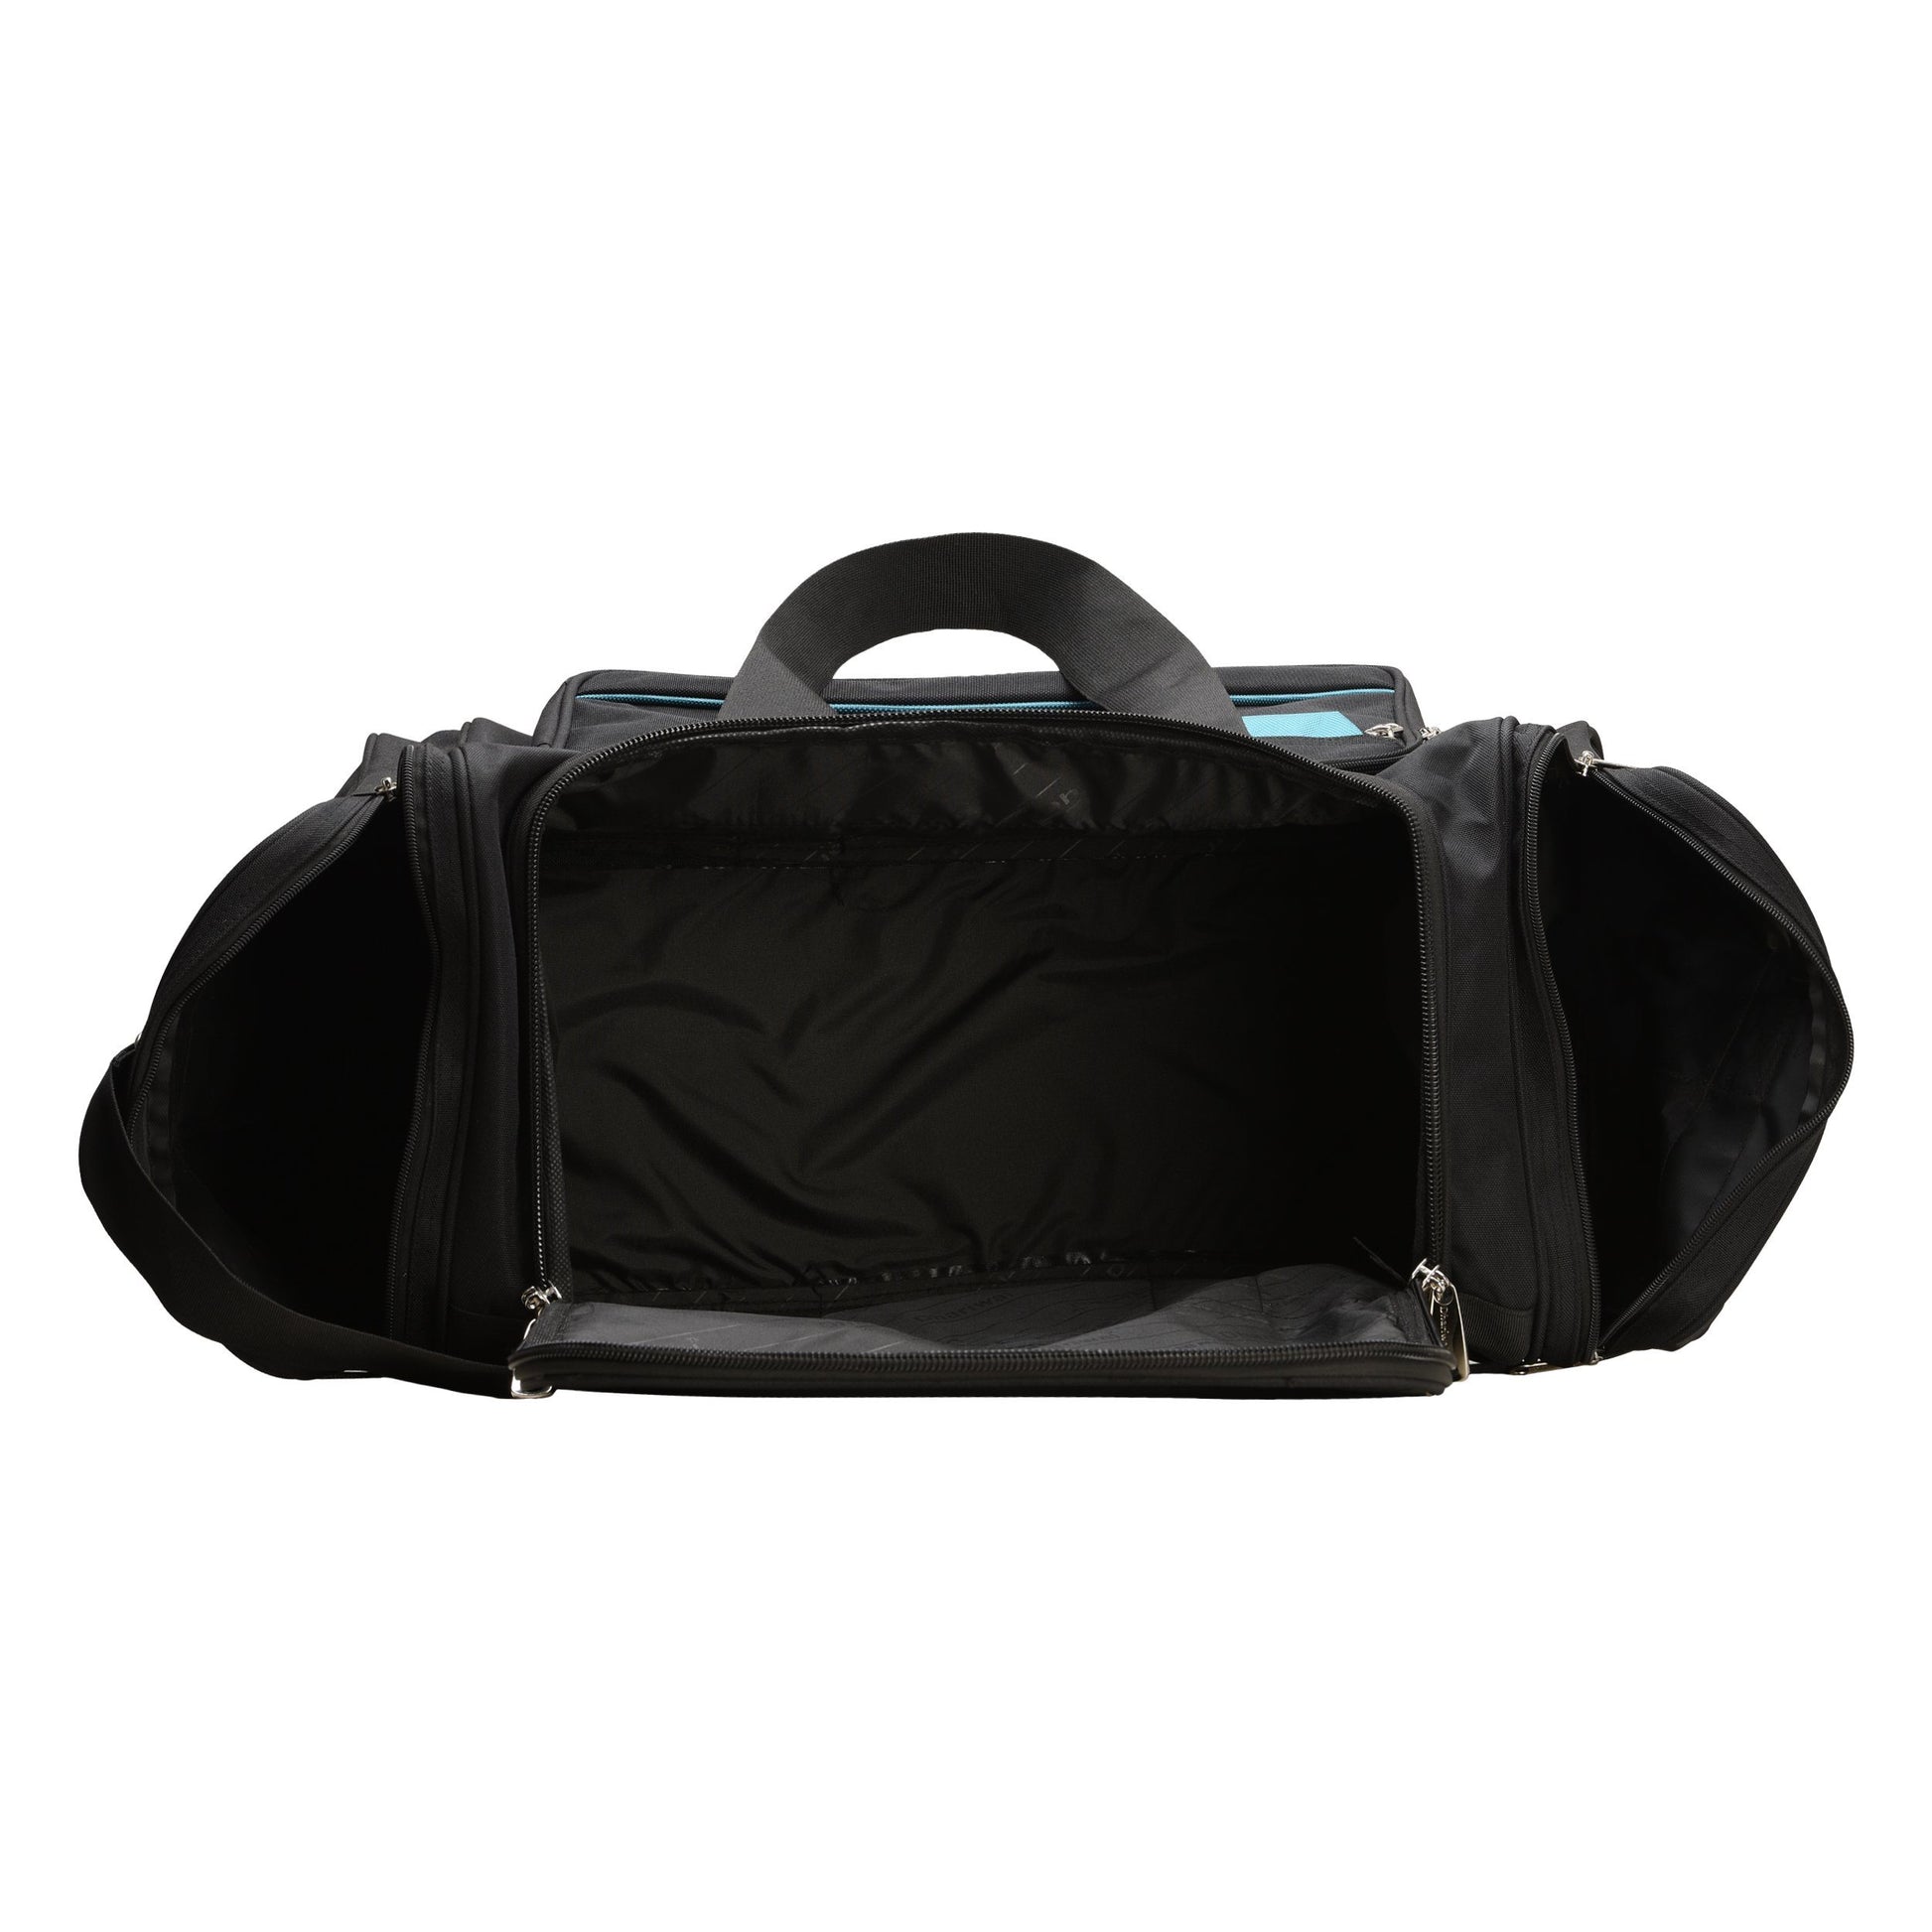 Handy Travelling Bag 900 X 900 Matty 50cm x 28cm x 22 cm TRB-518 Travelling Bags Dhariwal 